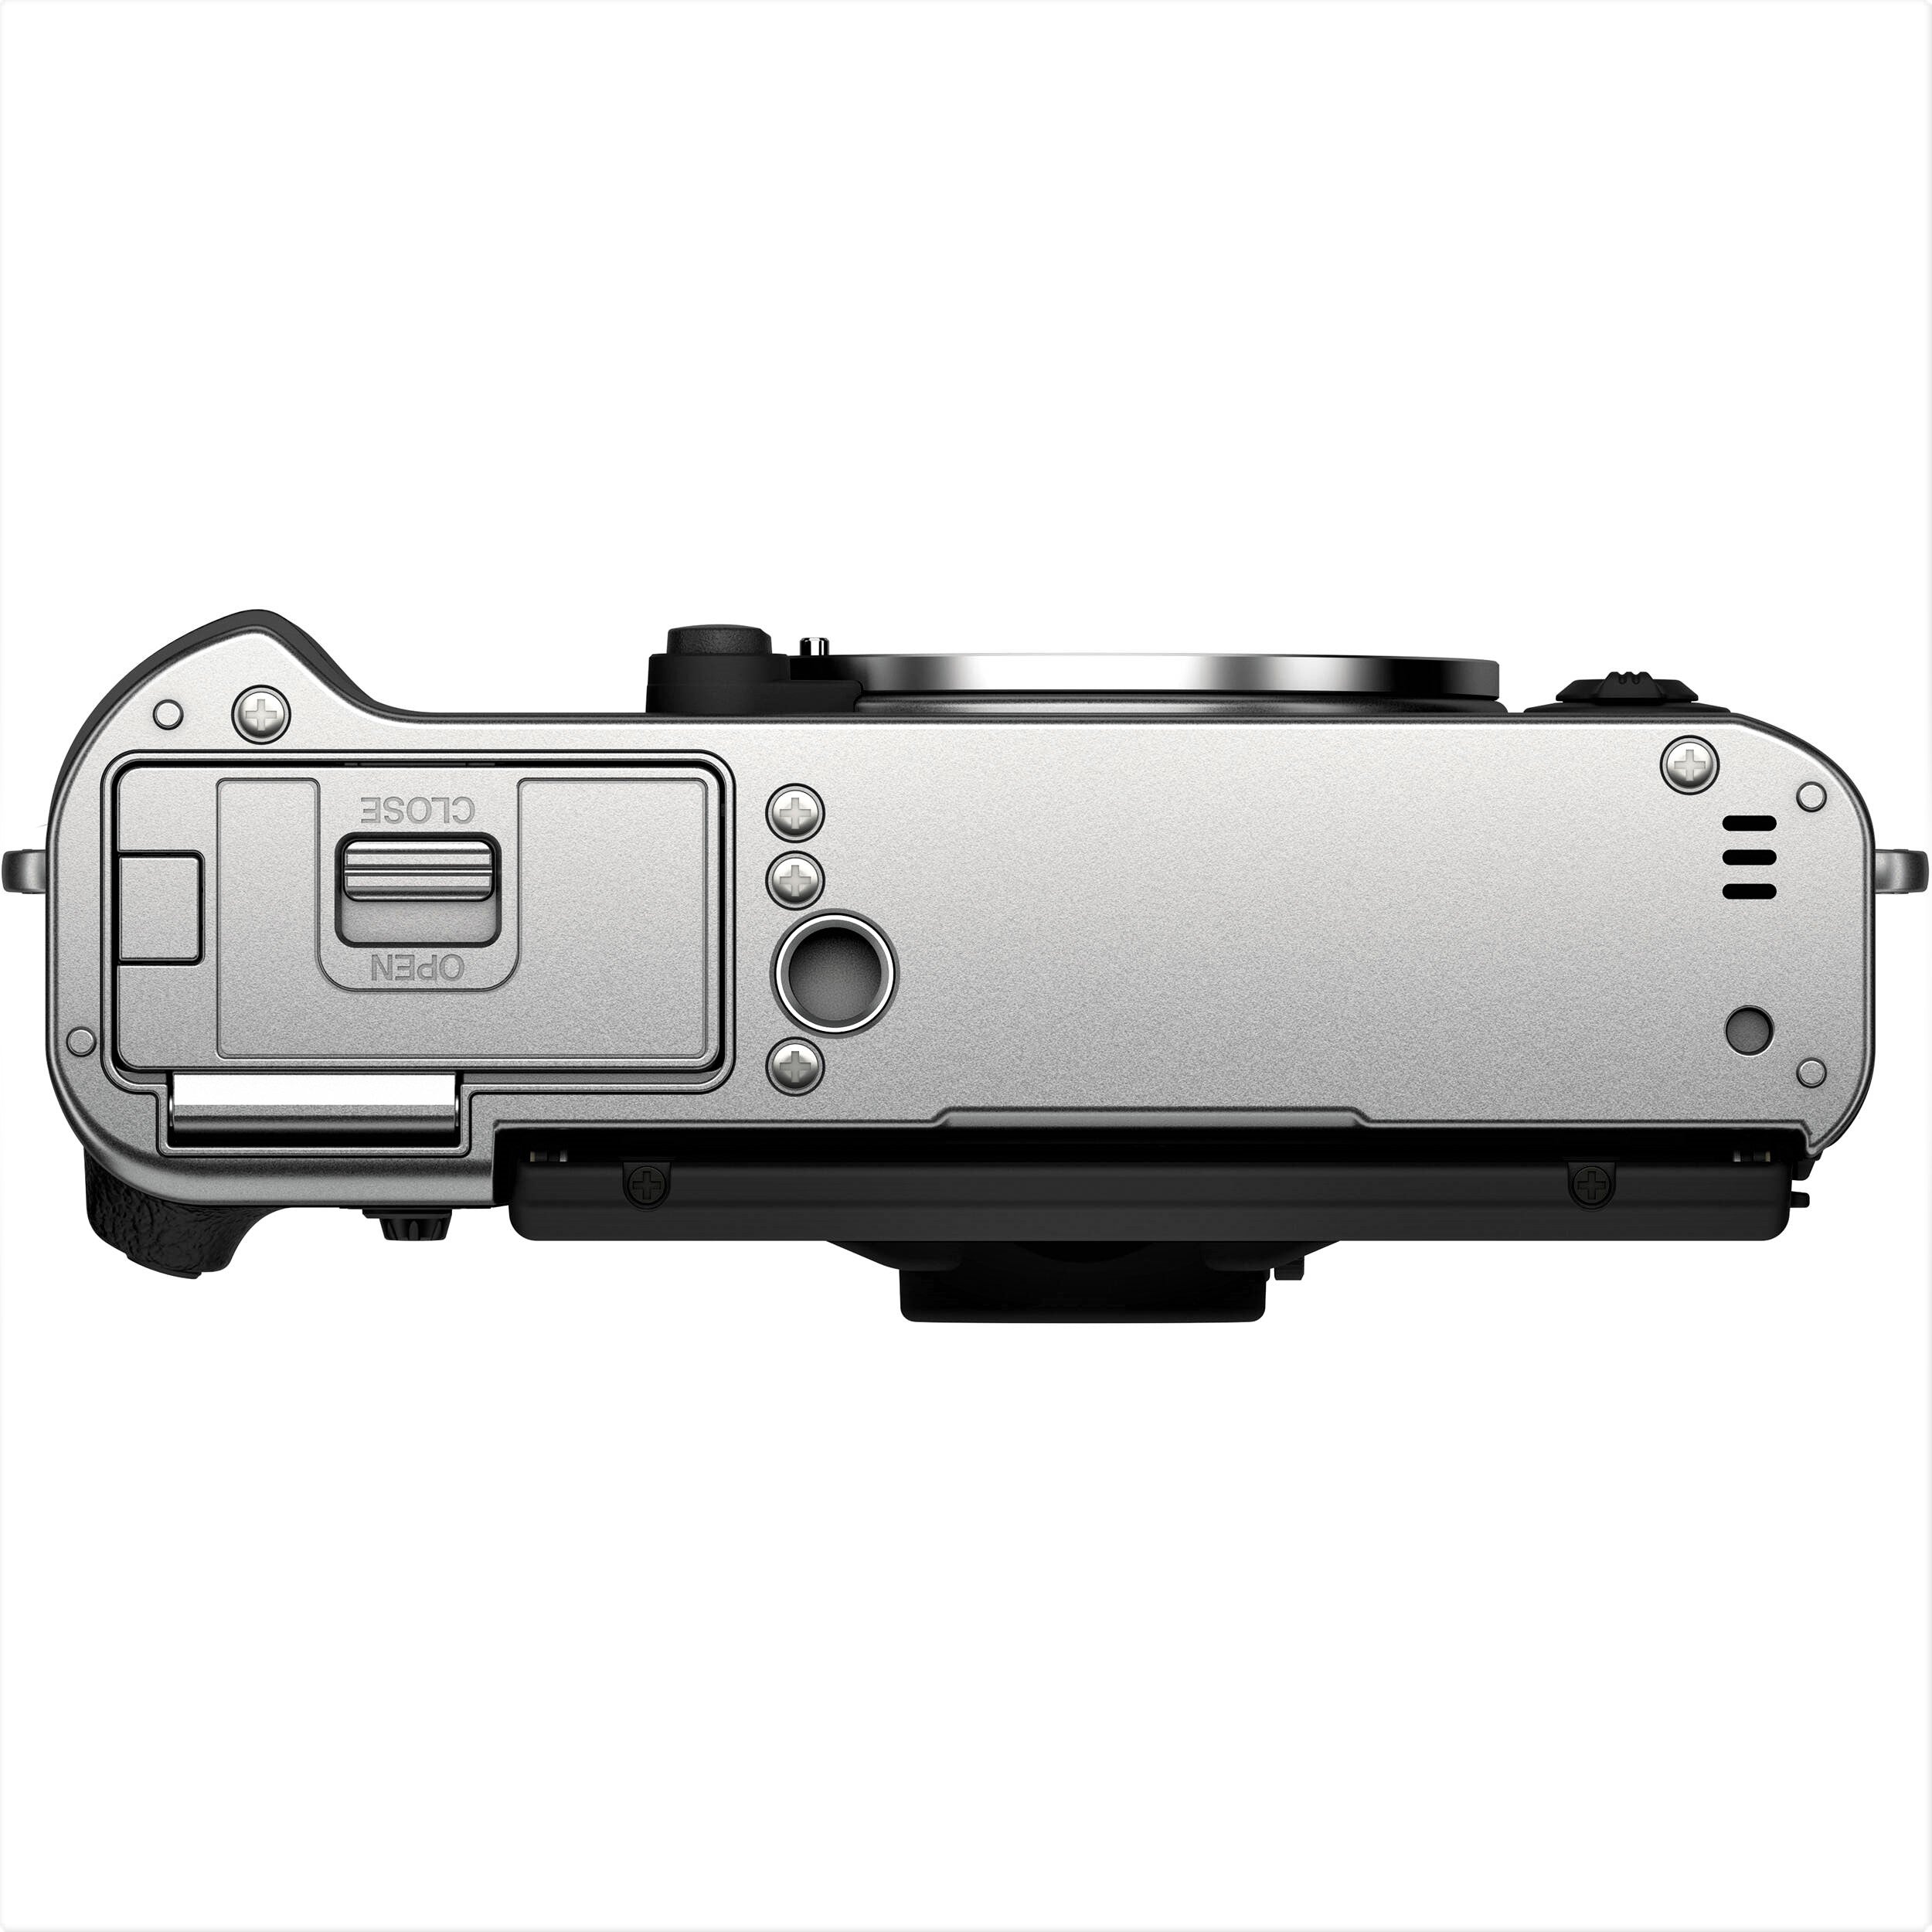 Fujifilm X-T30 II Mirrorless Camera with 18-55mm Lens (Black & Silver)